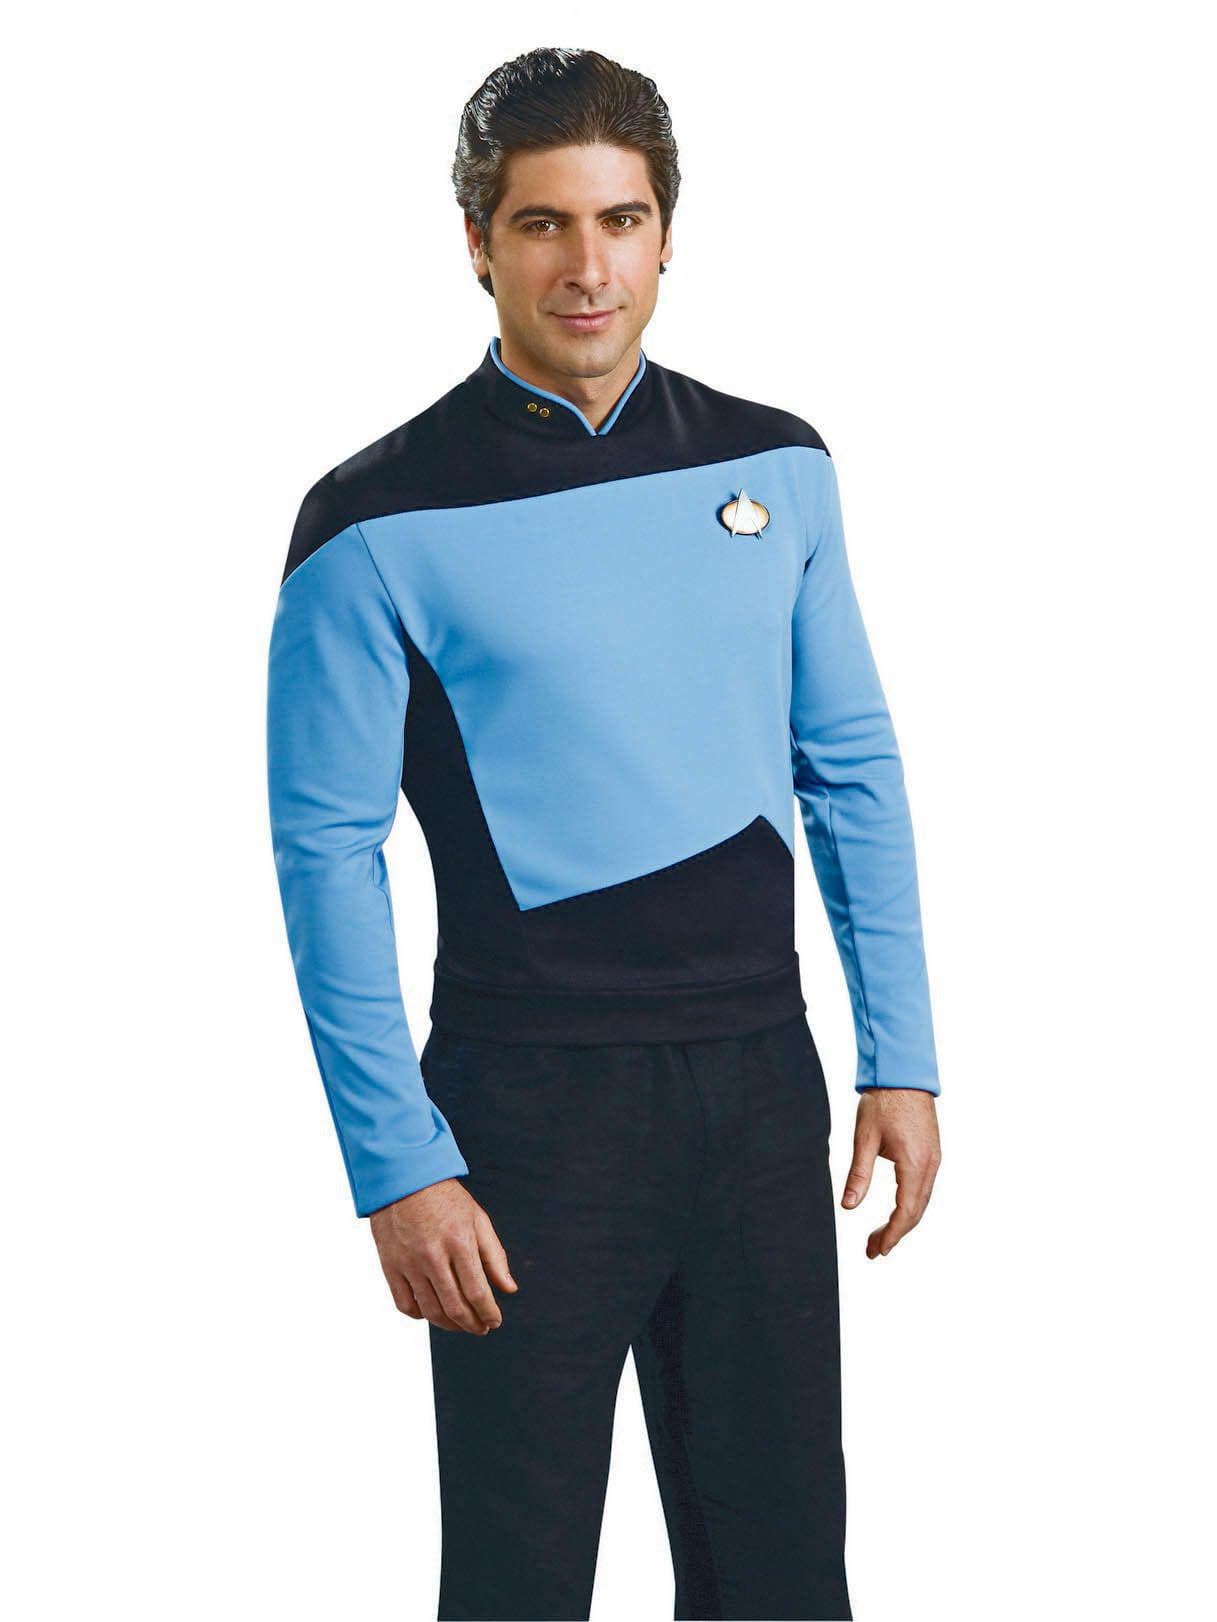 Adult Star Trek Spock Deluxe Costume - costumes.com